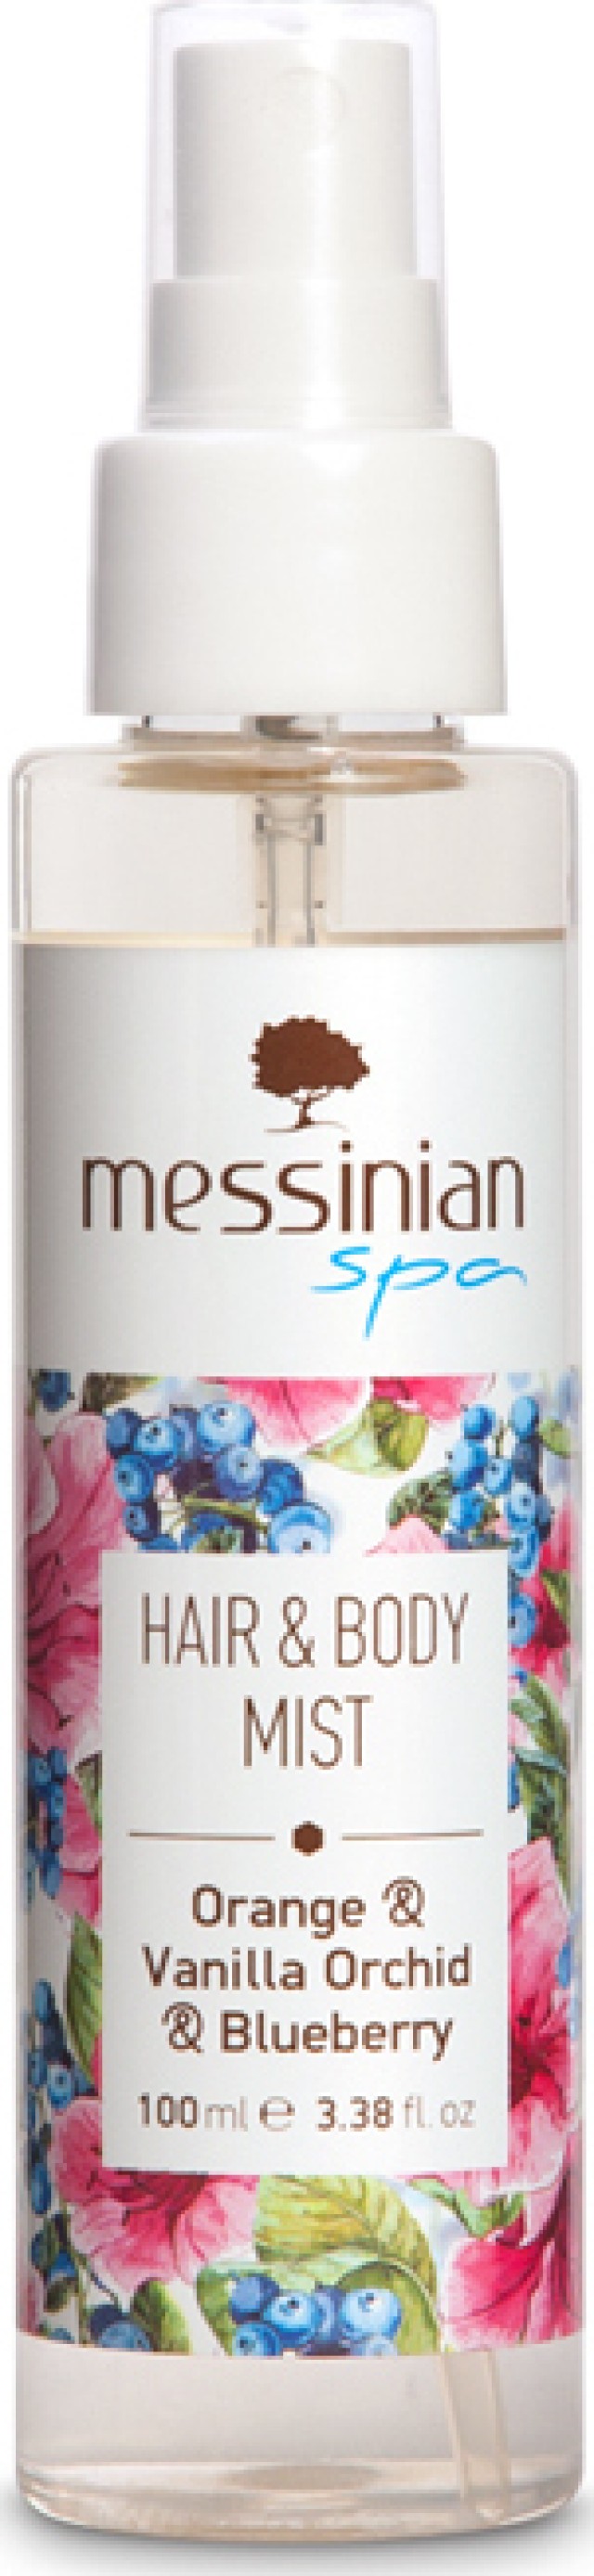 Messinian Spa Hair & Body Mist Orange & Vanilla Orchid & Blueberry Αρωματικό Σπρέι για Μαλλιά & Σώμα 100ml